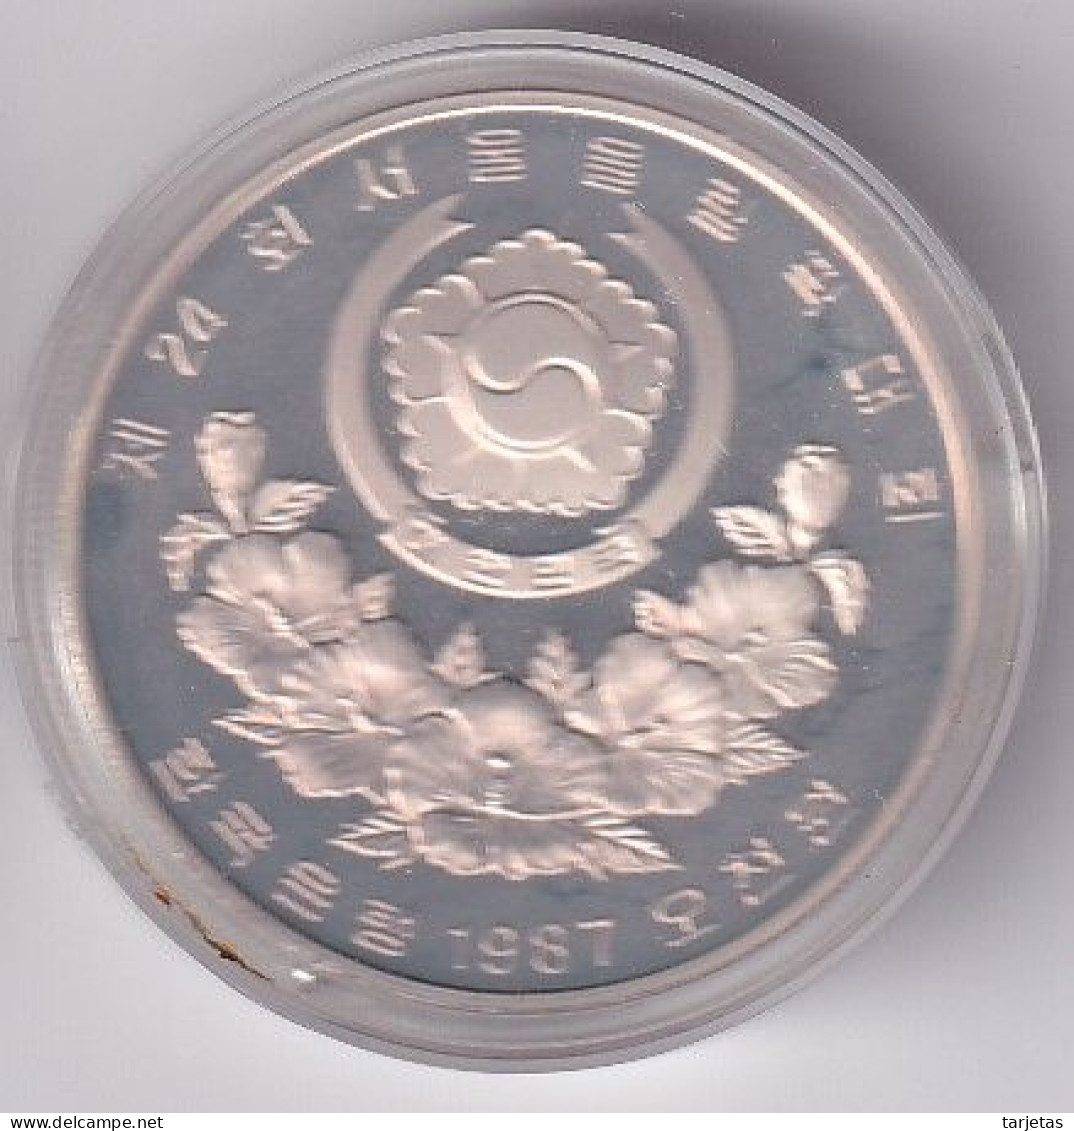 MONEDA DE PLATA DE COREA DEL SUR DE 5000 WON DEL AÑO 1987  (COIN) SEOUL 1988 - Korea (Süd-)